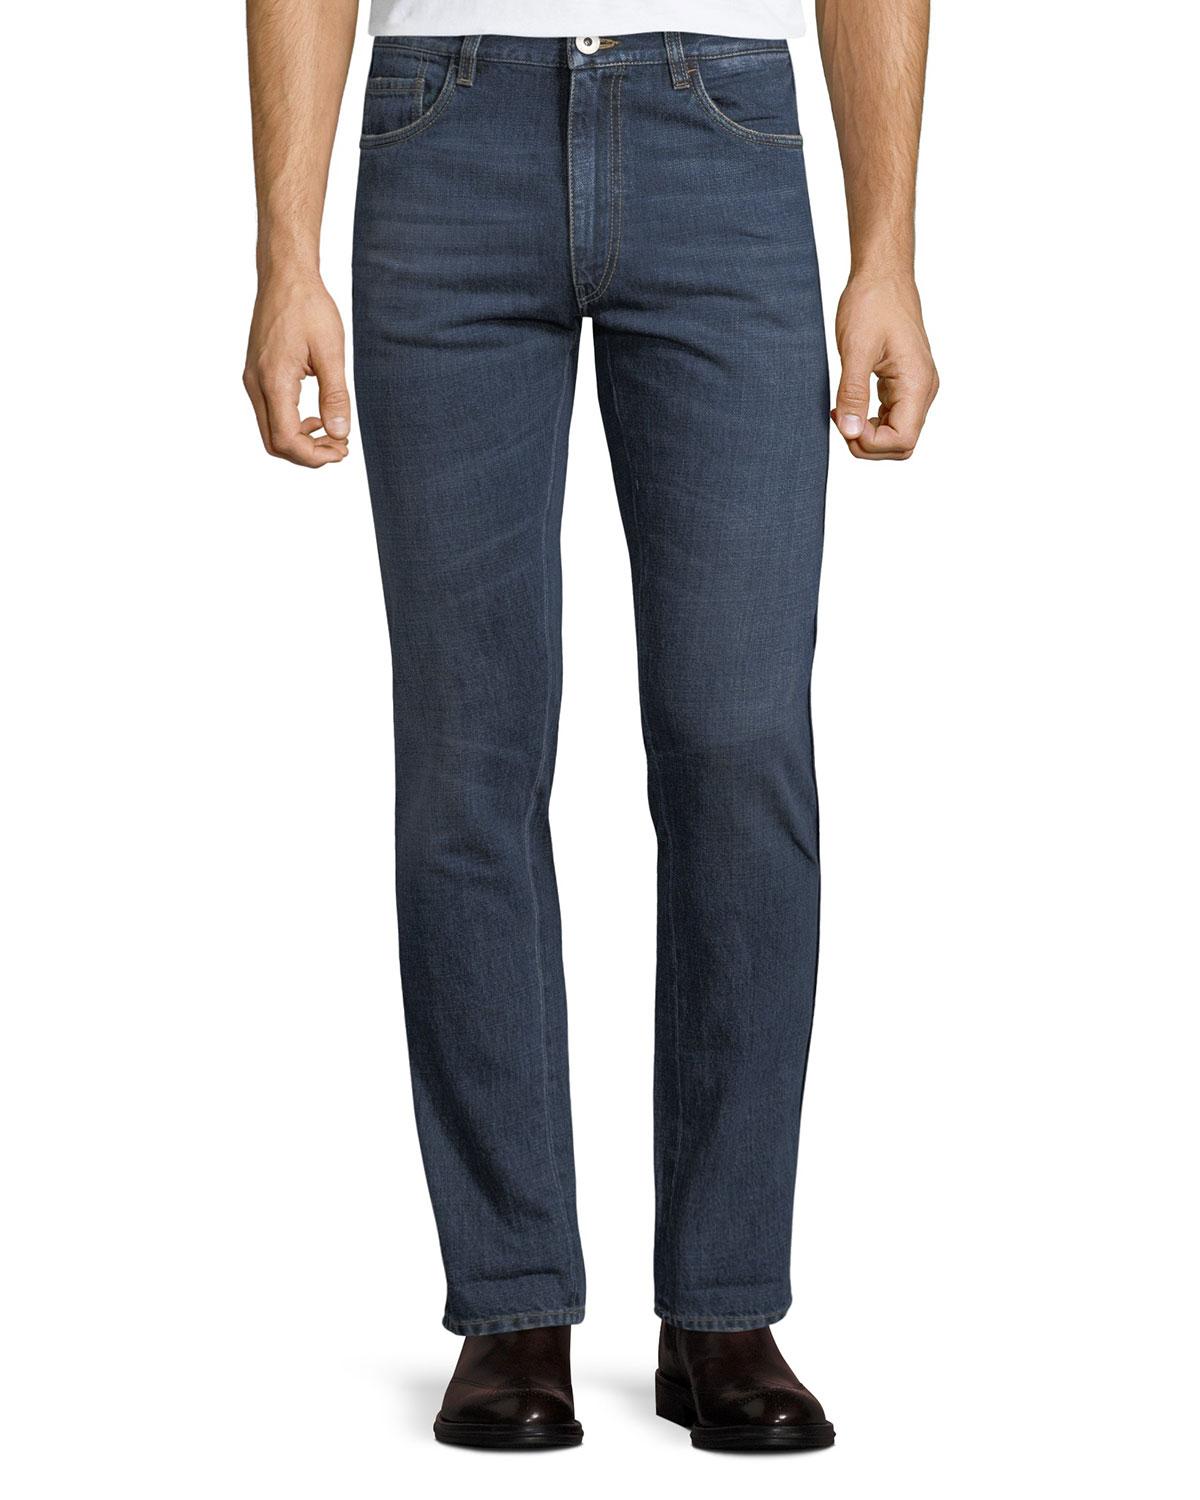 Prada Men's Classic Used Denim Jeans in Blue for Men - Lyst